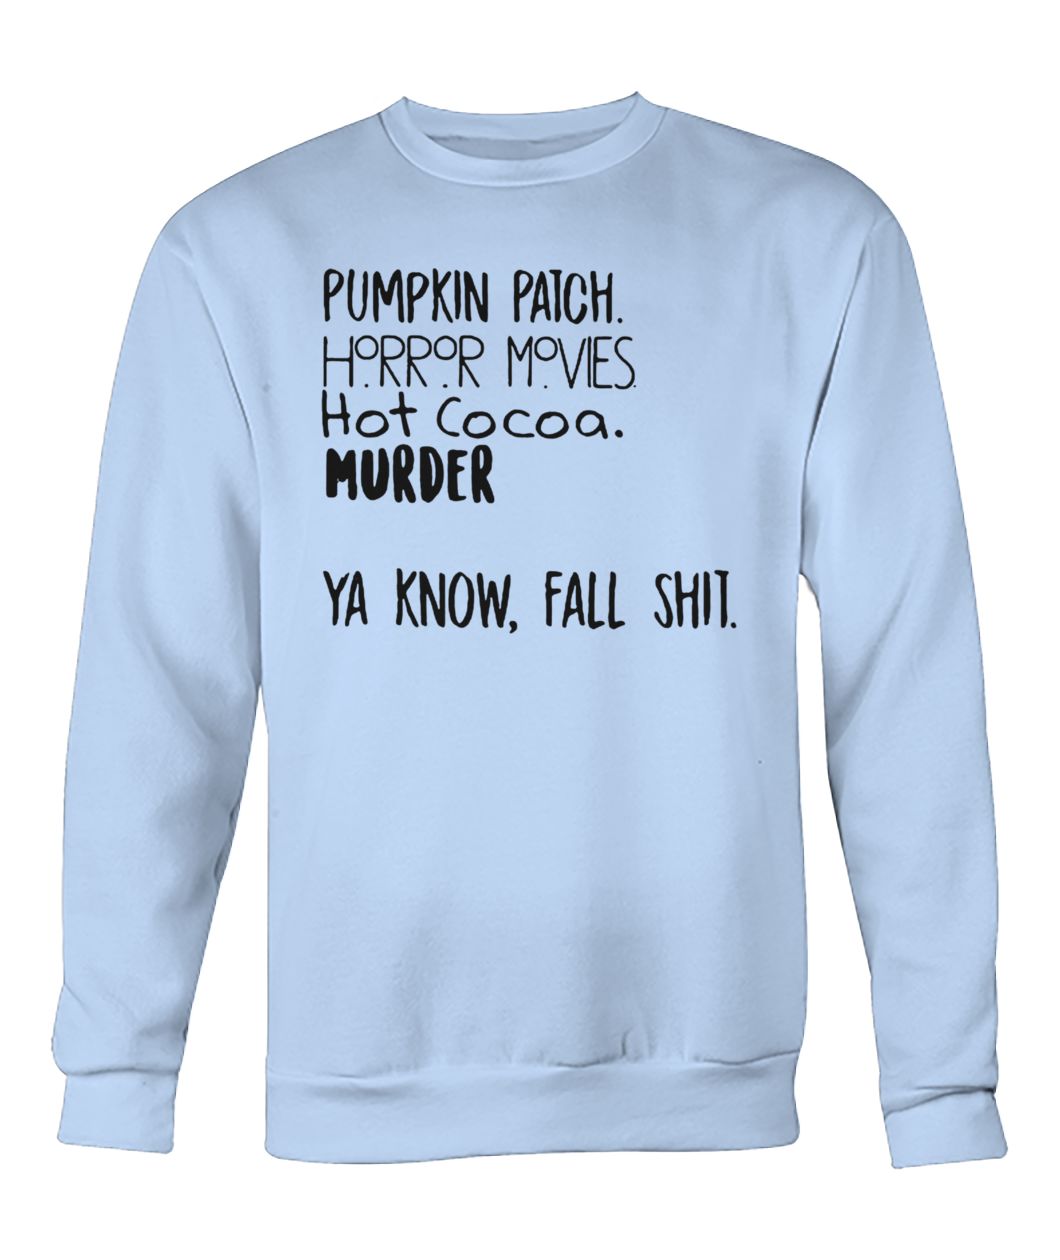 Pumpkin patch horror movies hot cocoa murder ya know fall shit crew neck sweatshirt